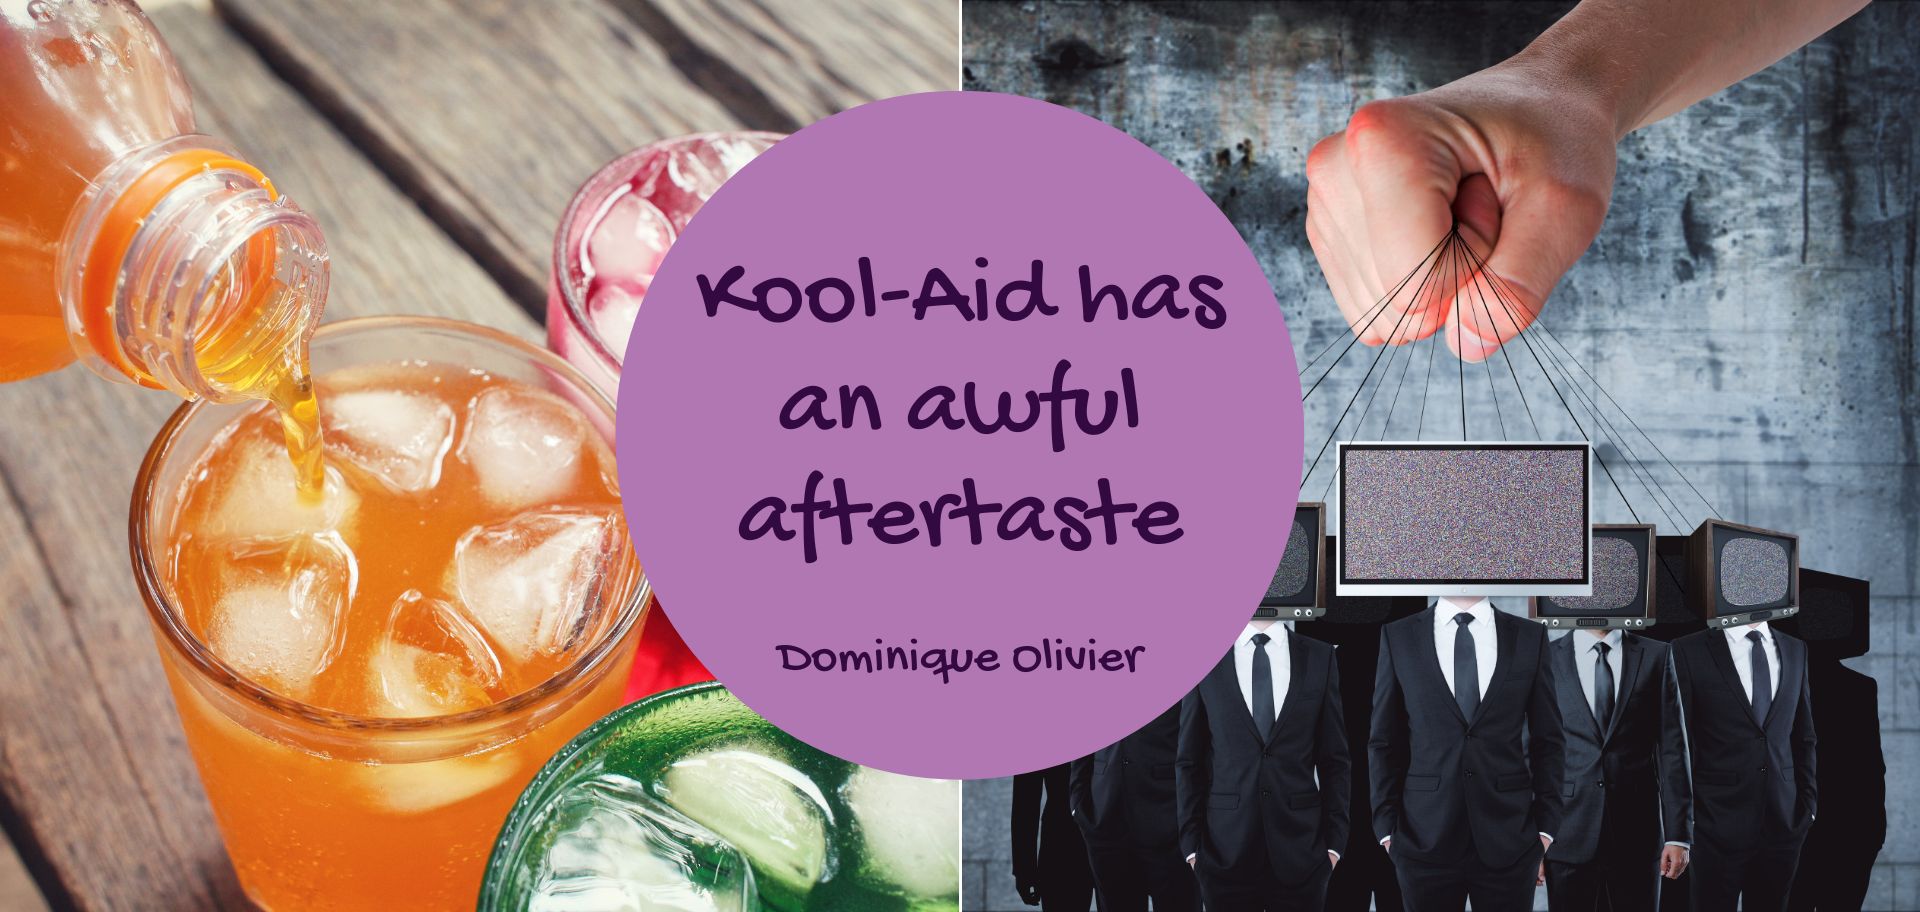 Kool-Aid has an awful aftertaste